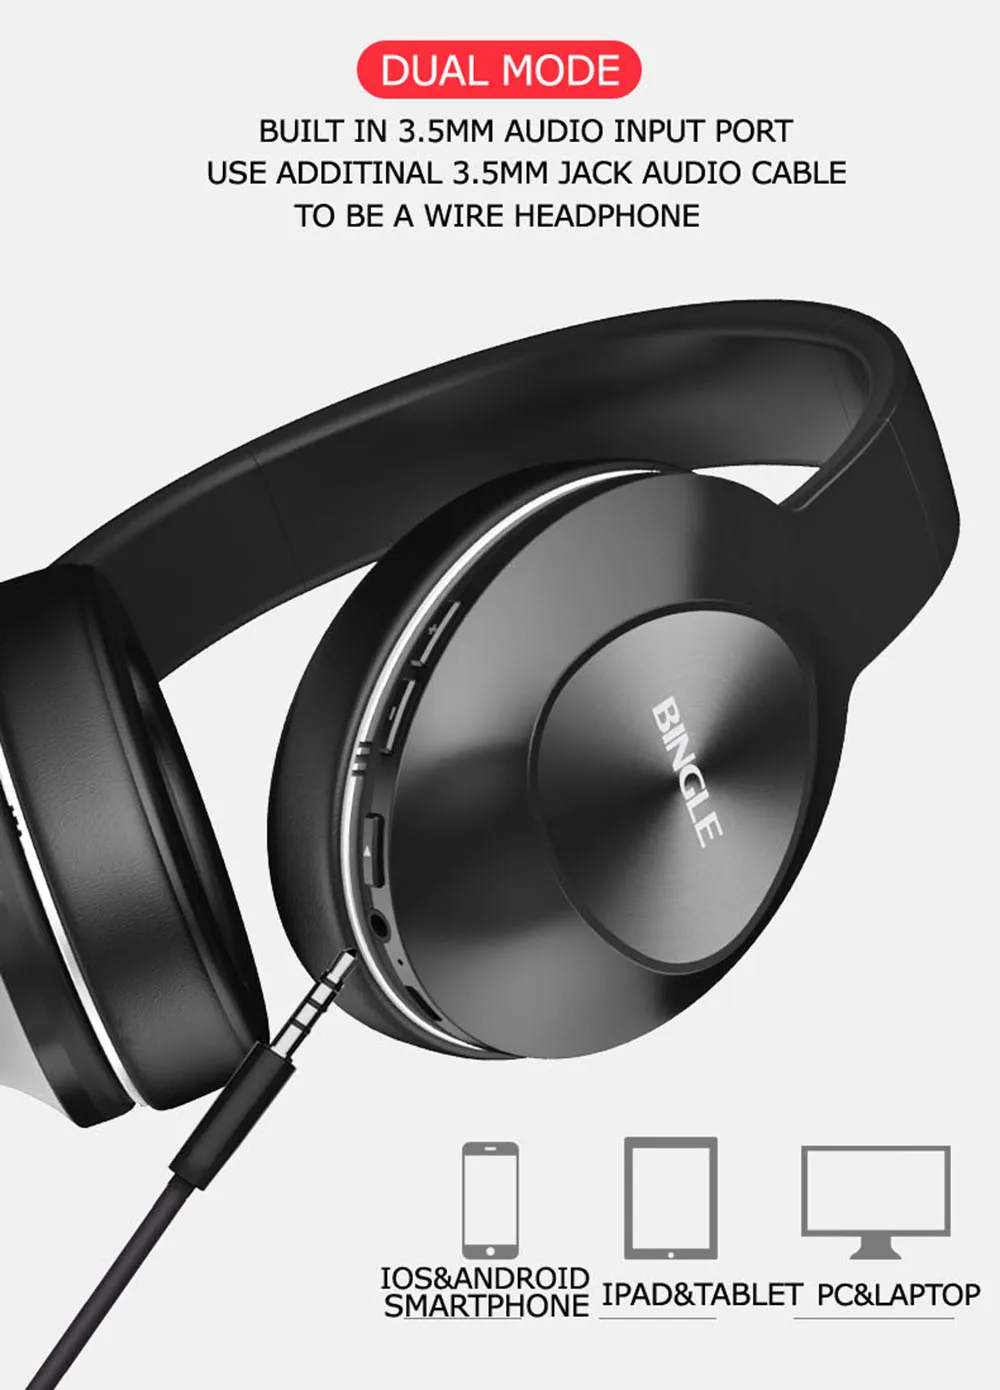 Bingle Q5 легкий вес hi-fi звук за ухо Шум шумоподавлением Bluetooth наушники проводные и Беспроводной наушники с микрофоном